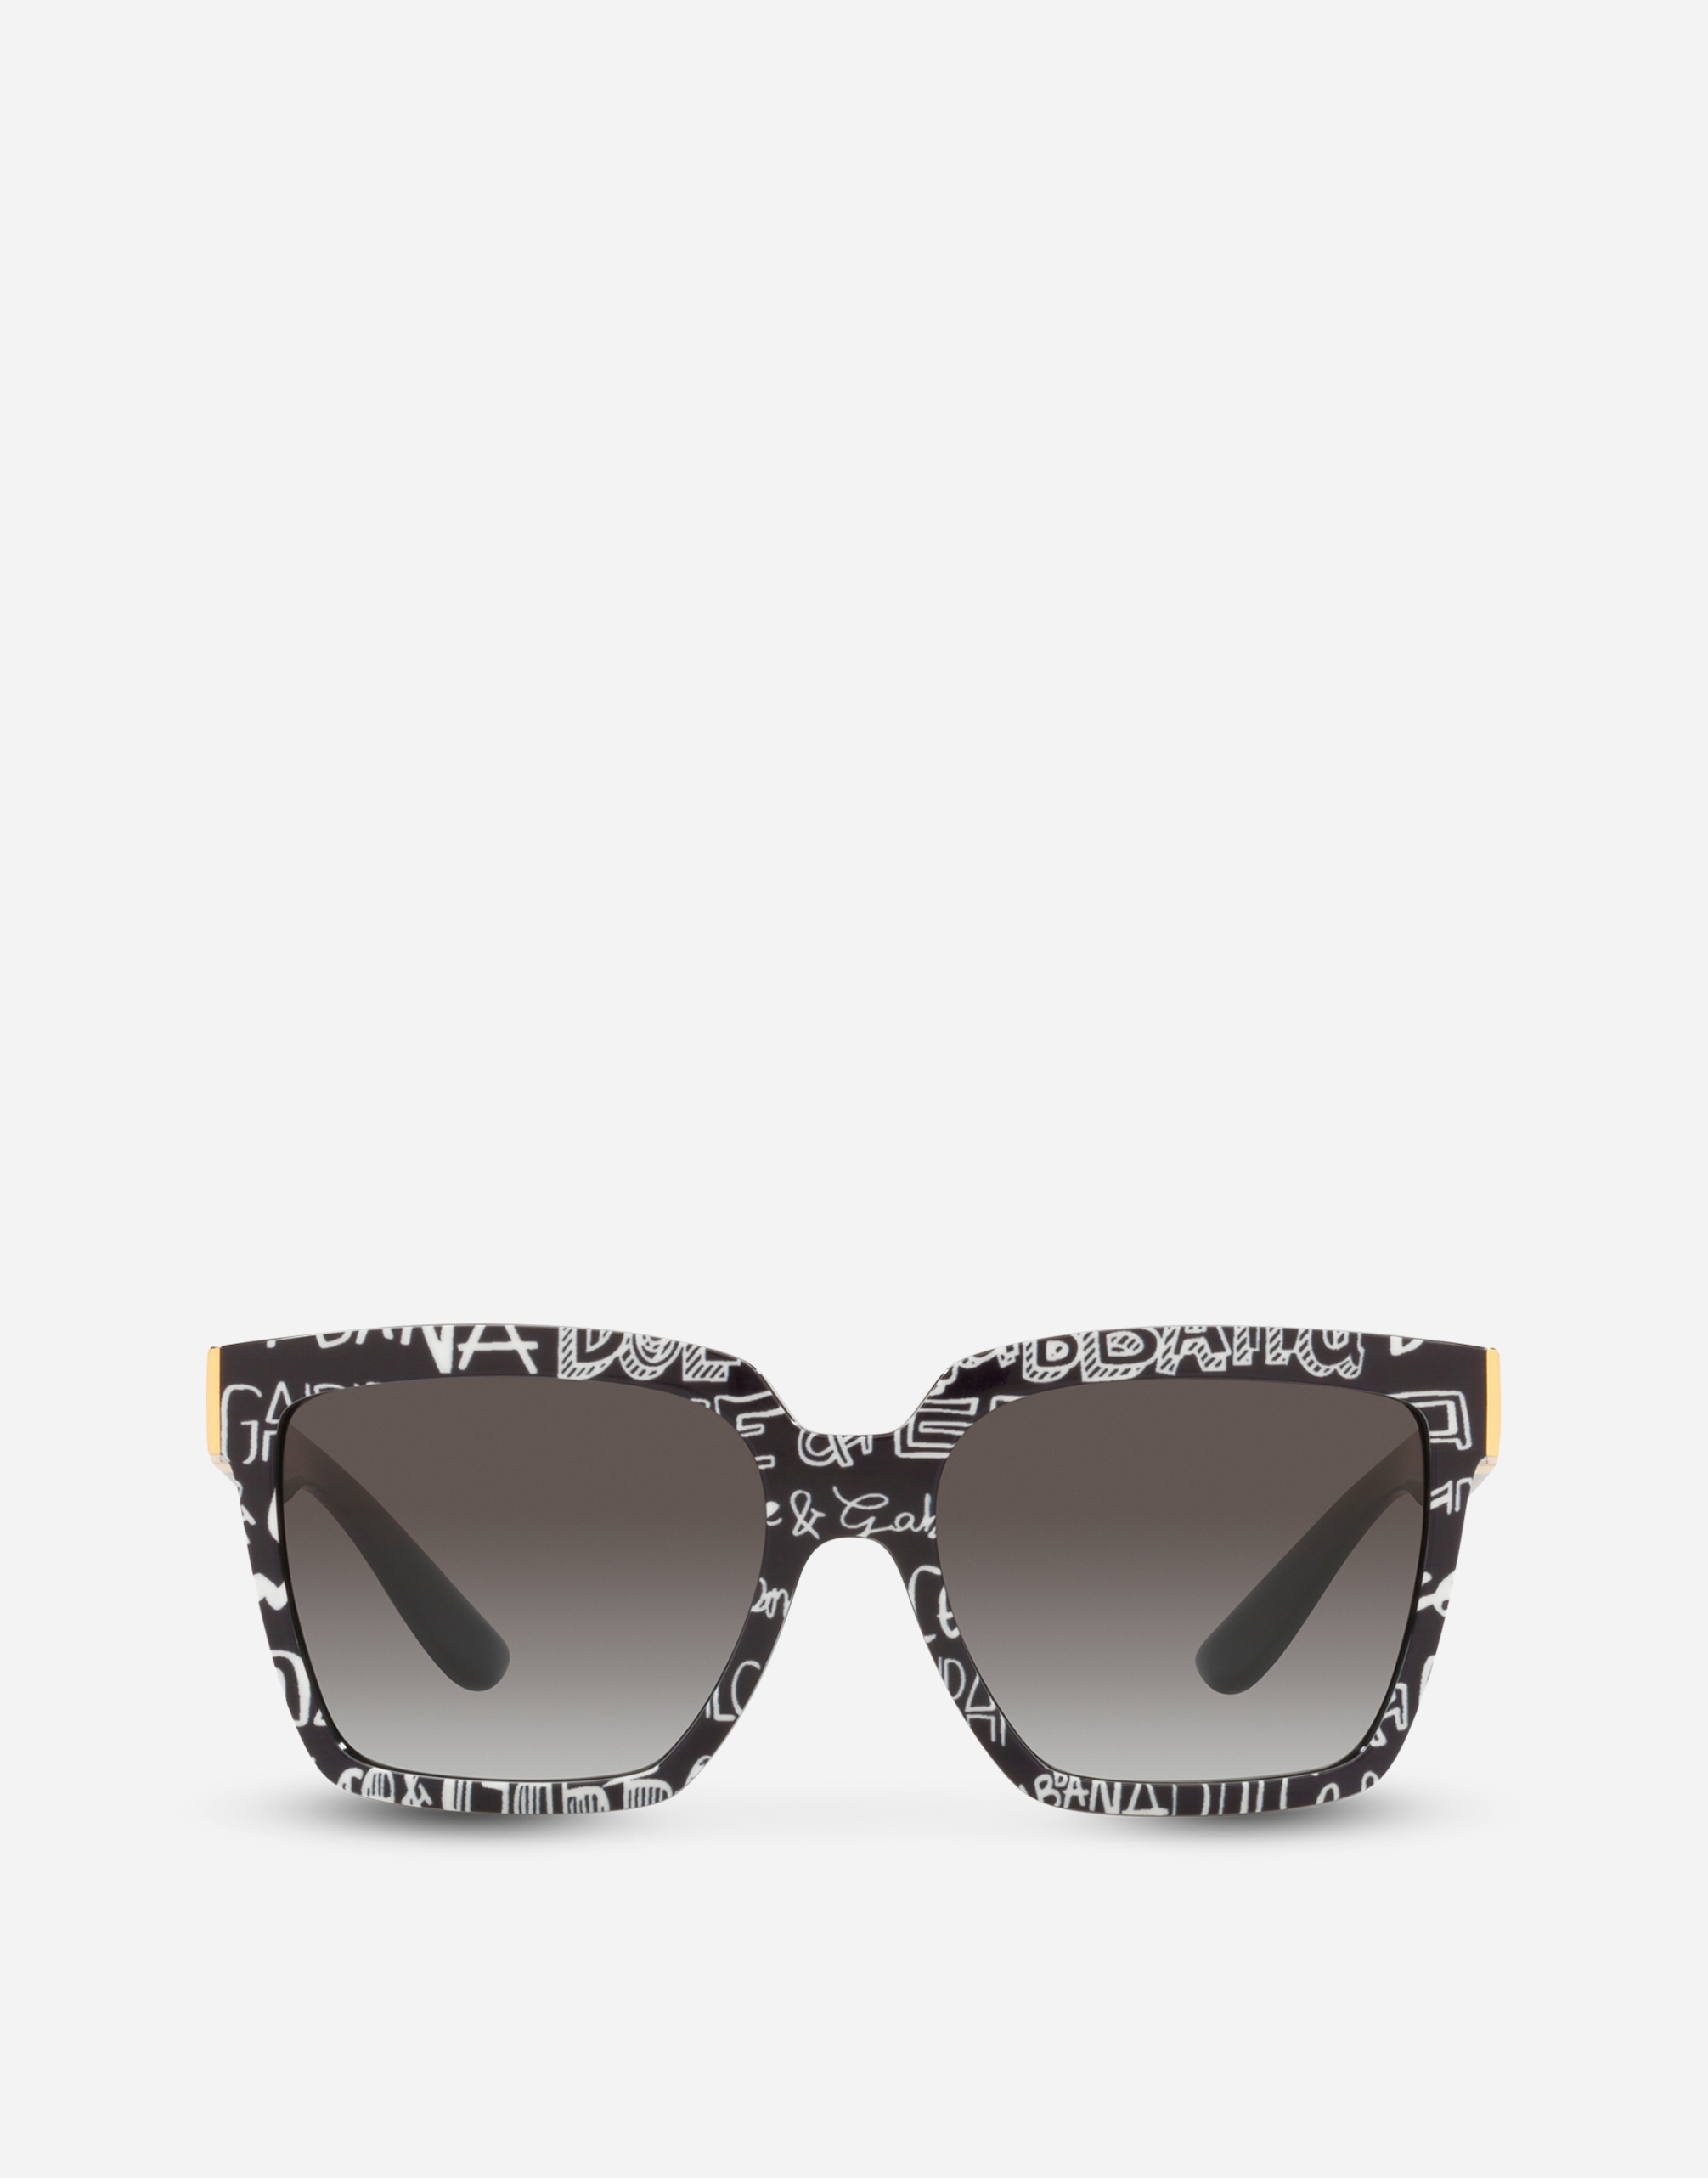 Modern print sunglasses in Black and white